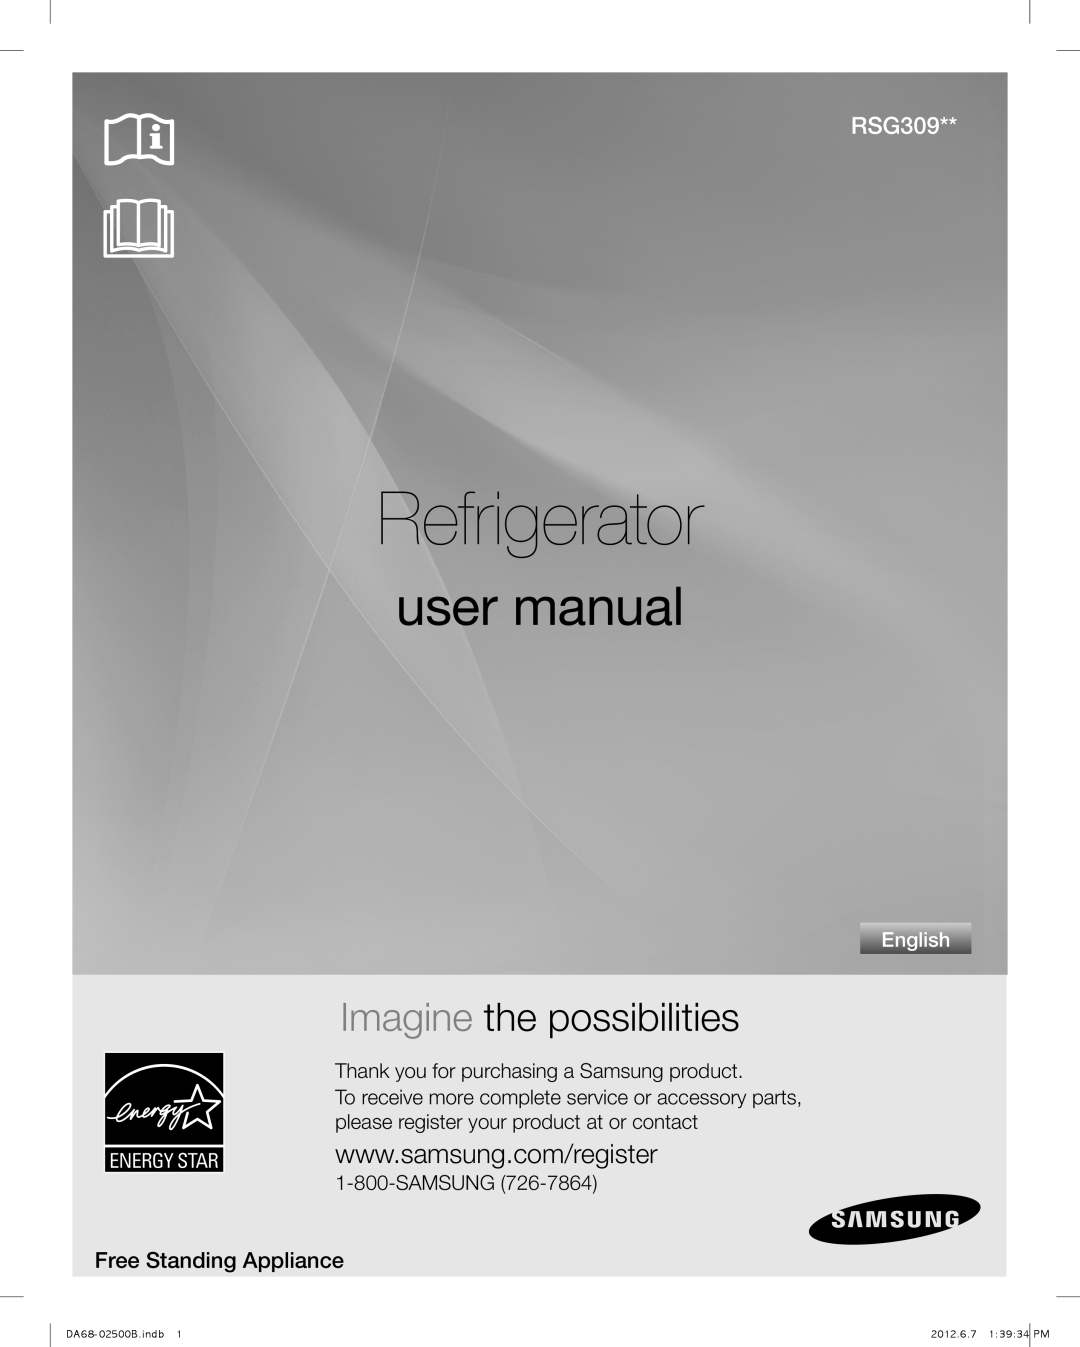 Samsung RSG309 user manual Refrigerator, Imagine the possibilities, Free Standing Appliance, English, Samsung, 2012.6.7 